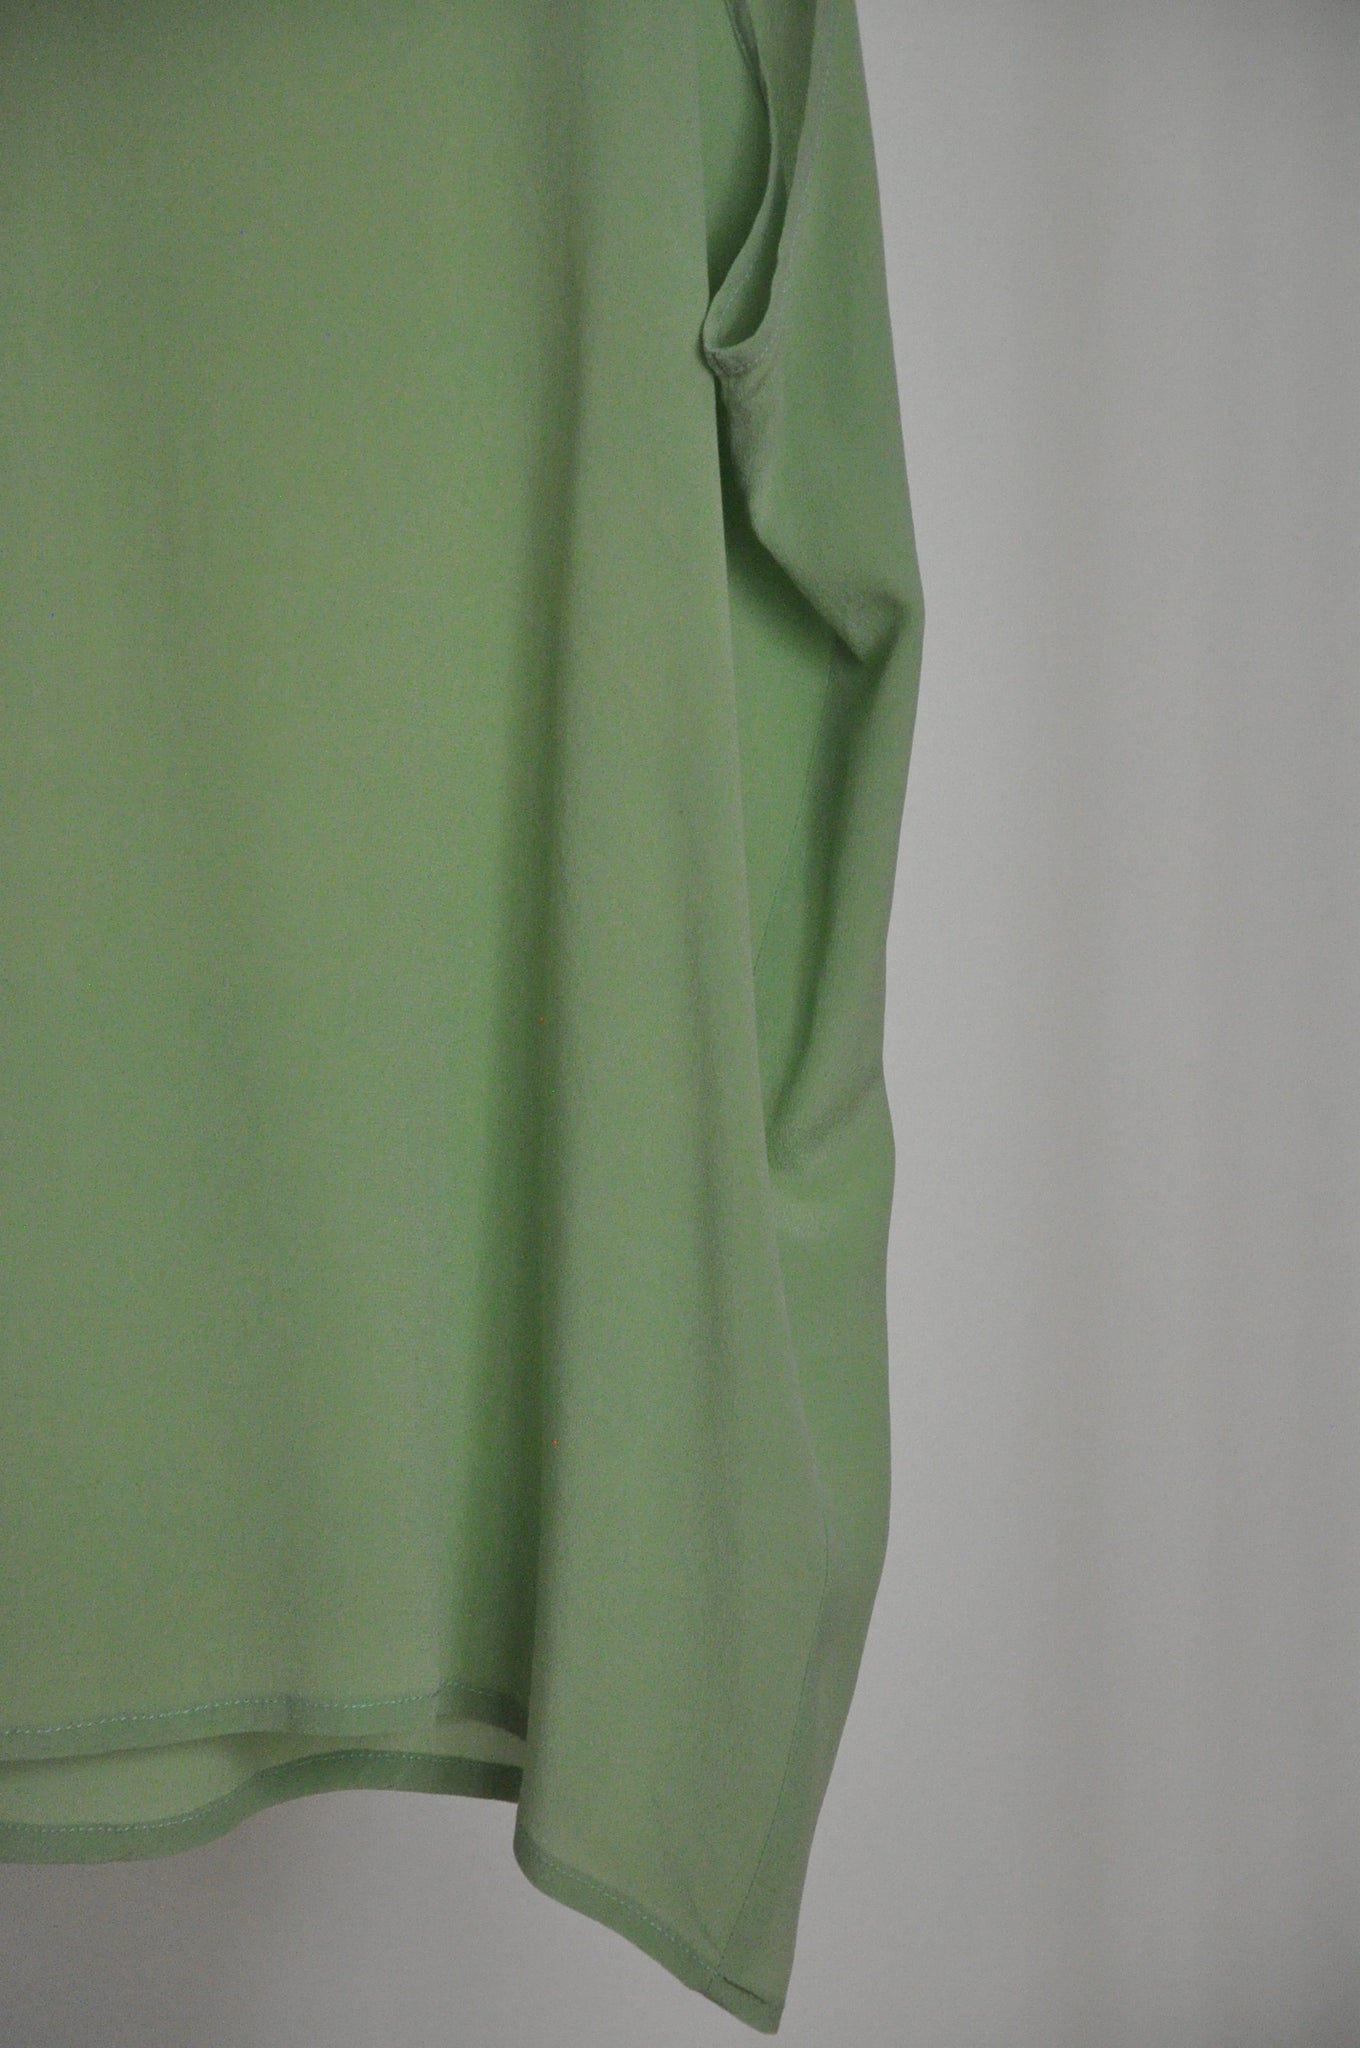 100% silk top in apple green / L-XL